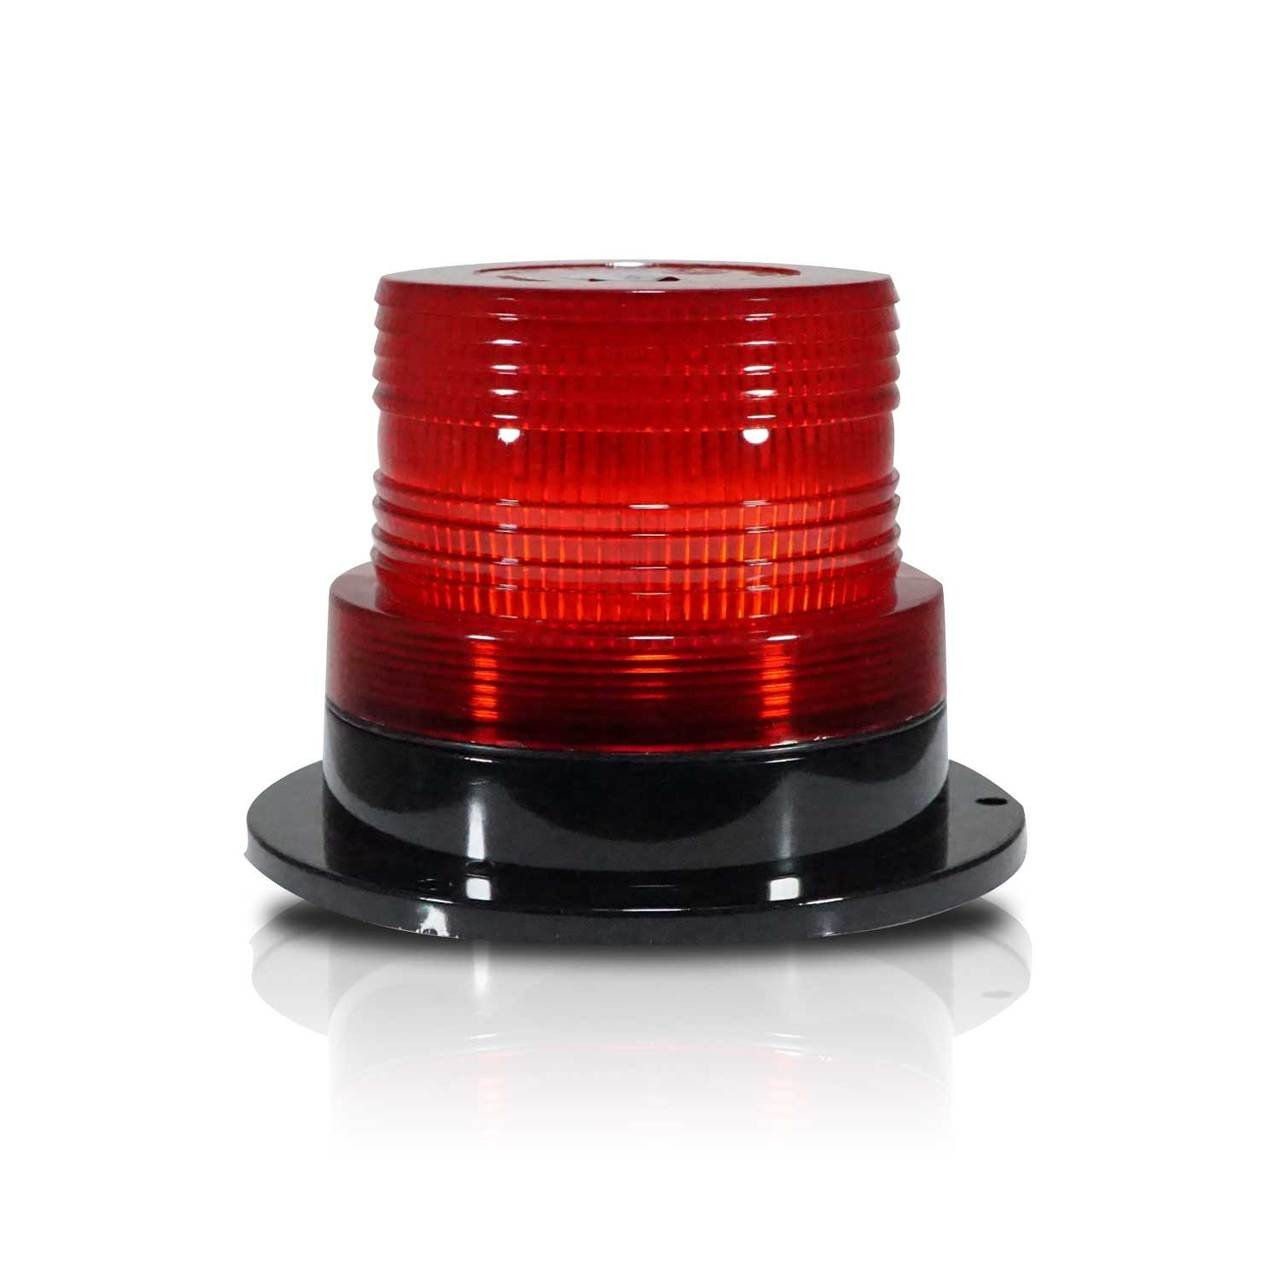 Red LED Emergency Flash Strobe and Rotating Beacon Warning Light